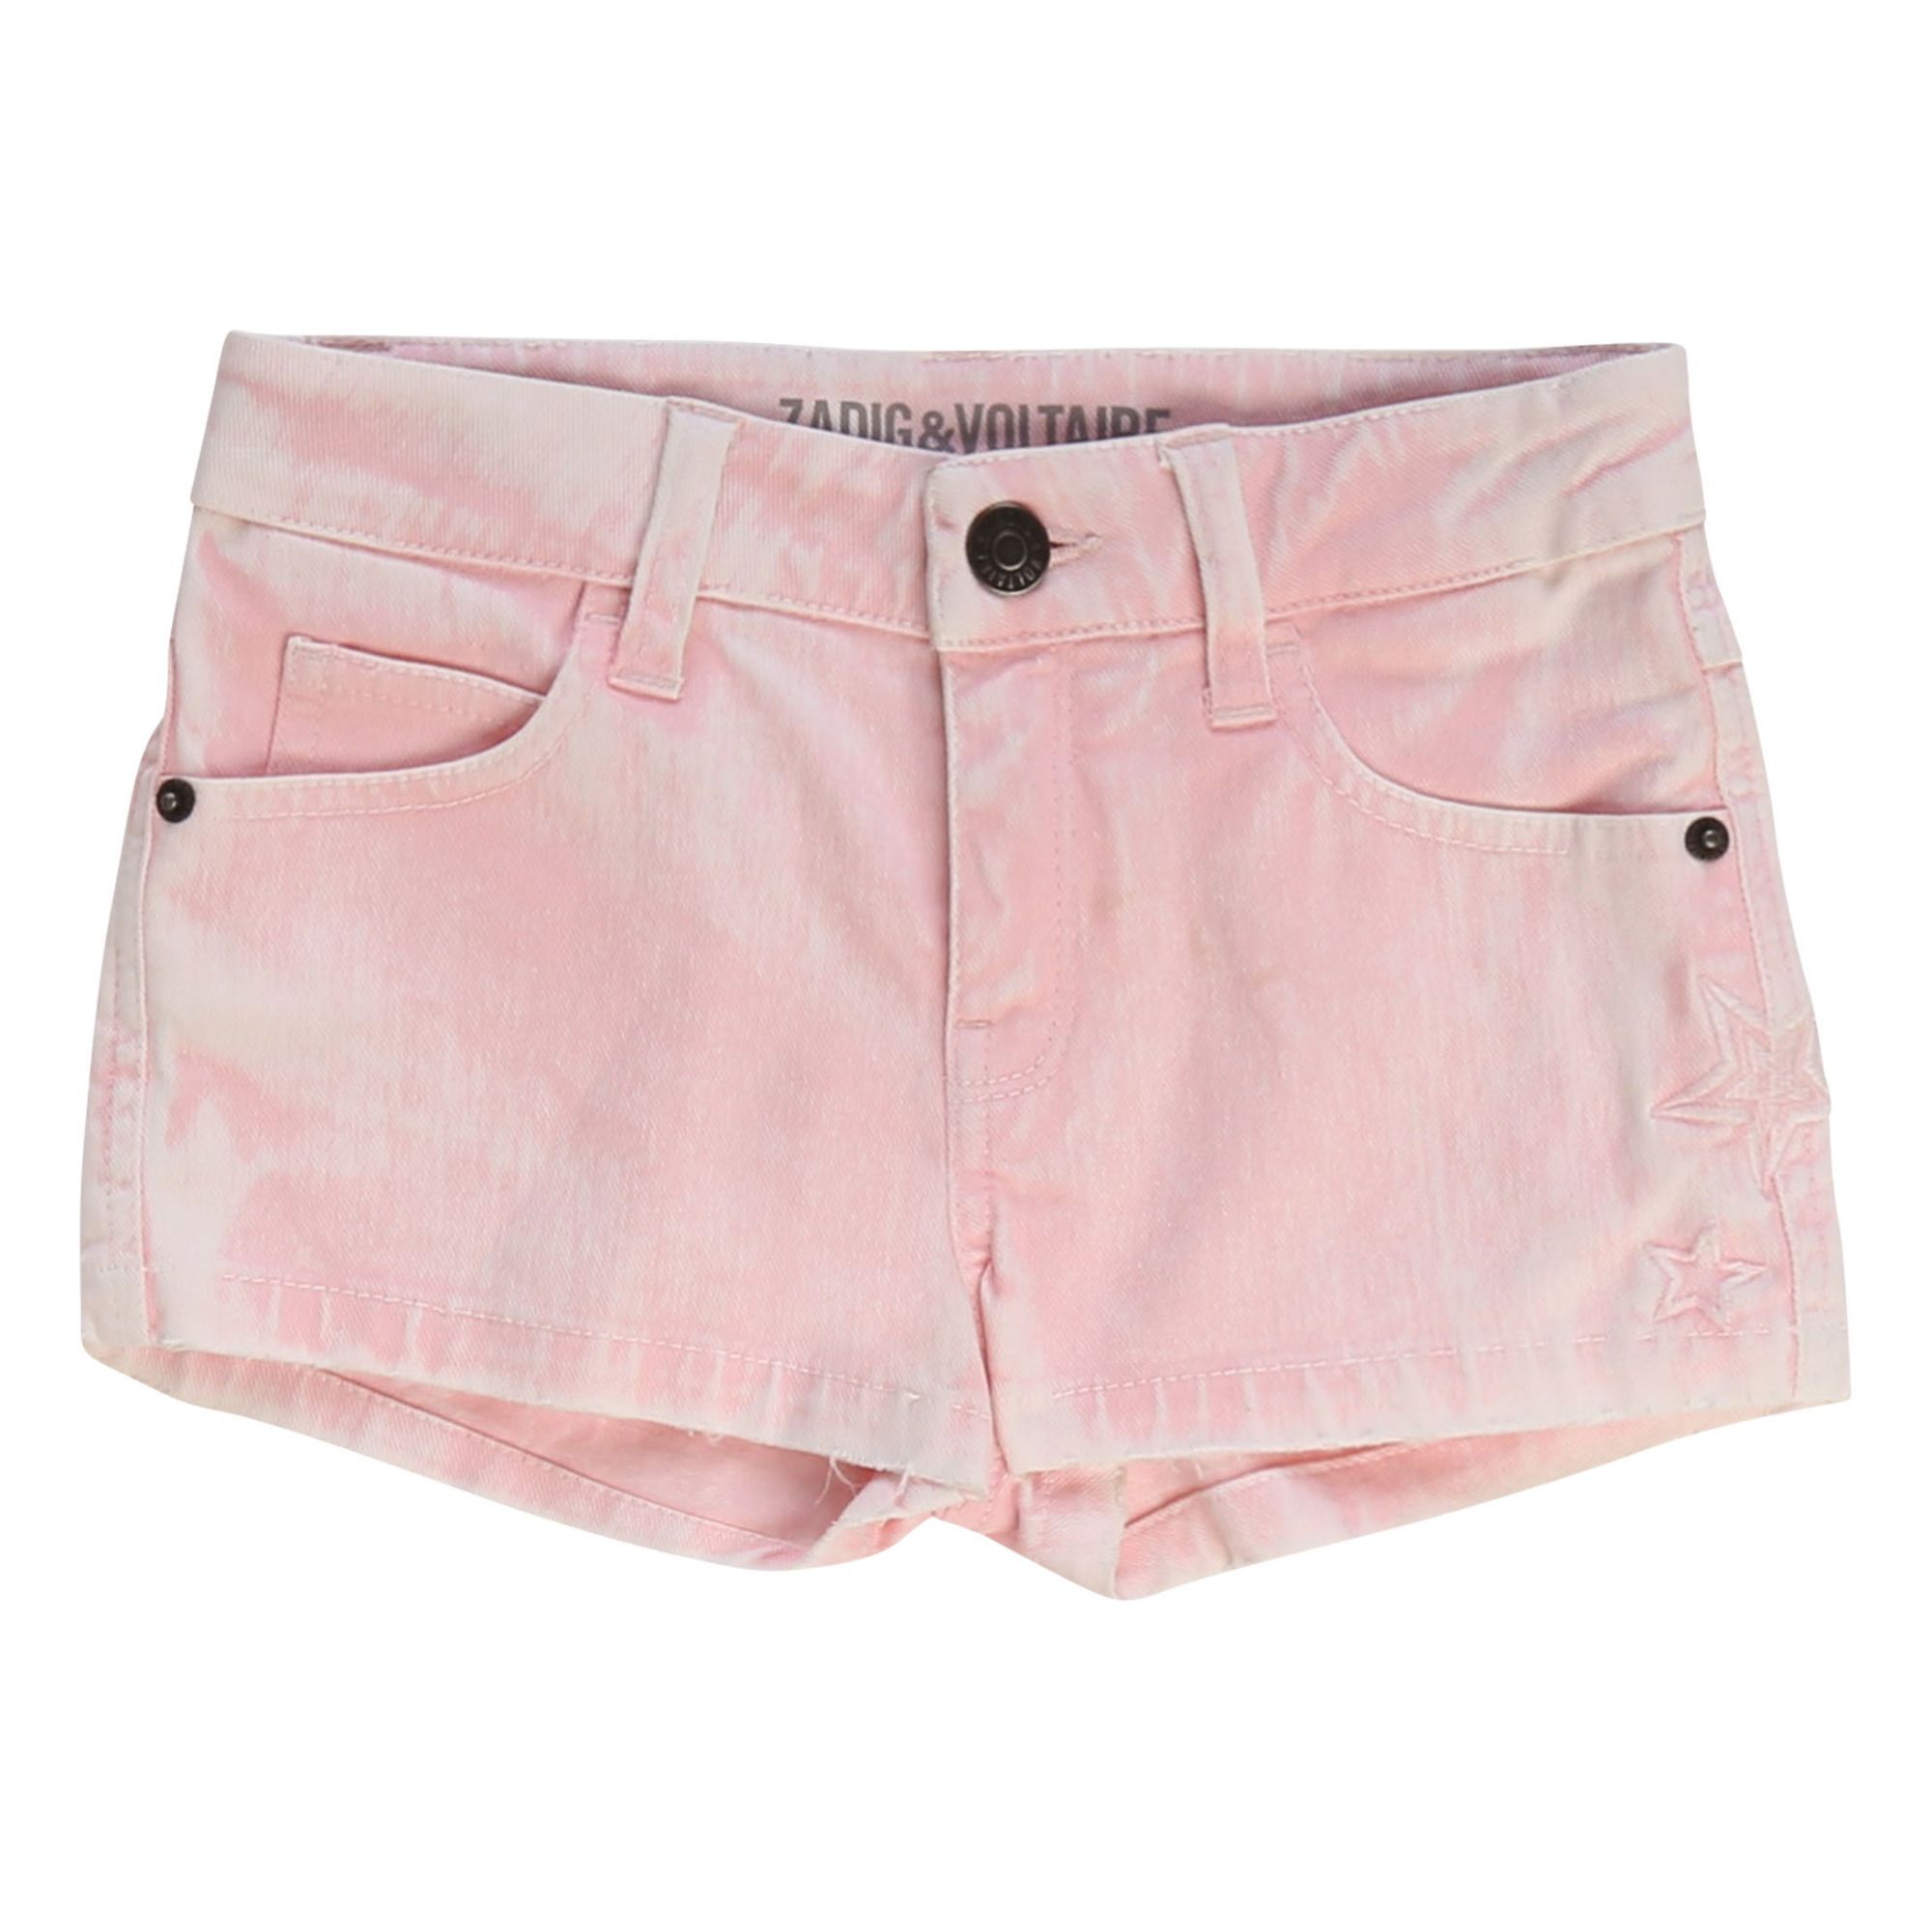 Zadig & Voltaire - Tie dye denim shorts - Pink | Smallable